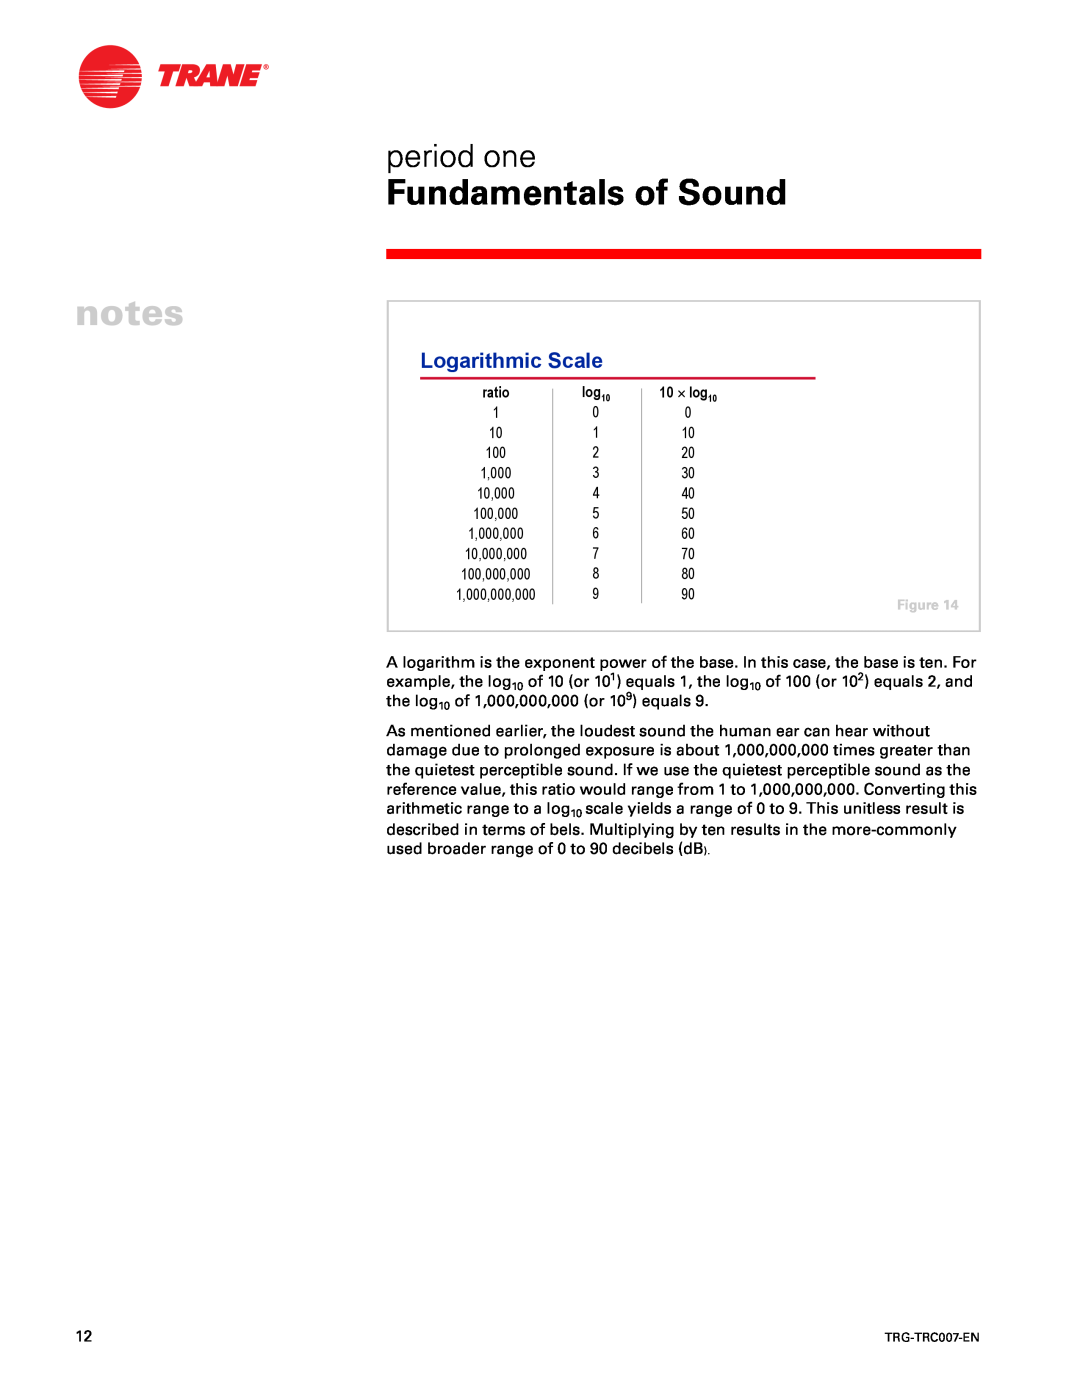 Trane TRG-TRC007-EN manual Logarithmic Scale, Fundamentals of Sound, period one, ratio, 10 ´ log10 